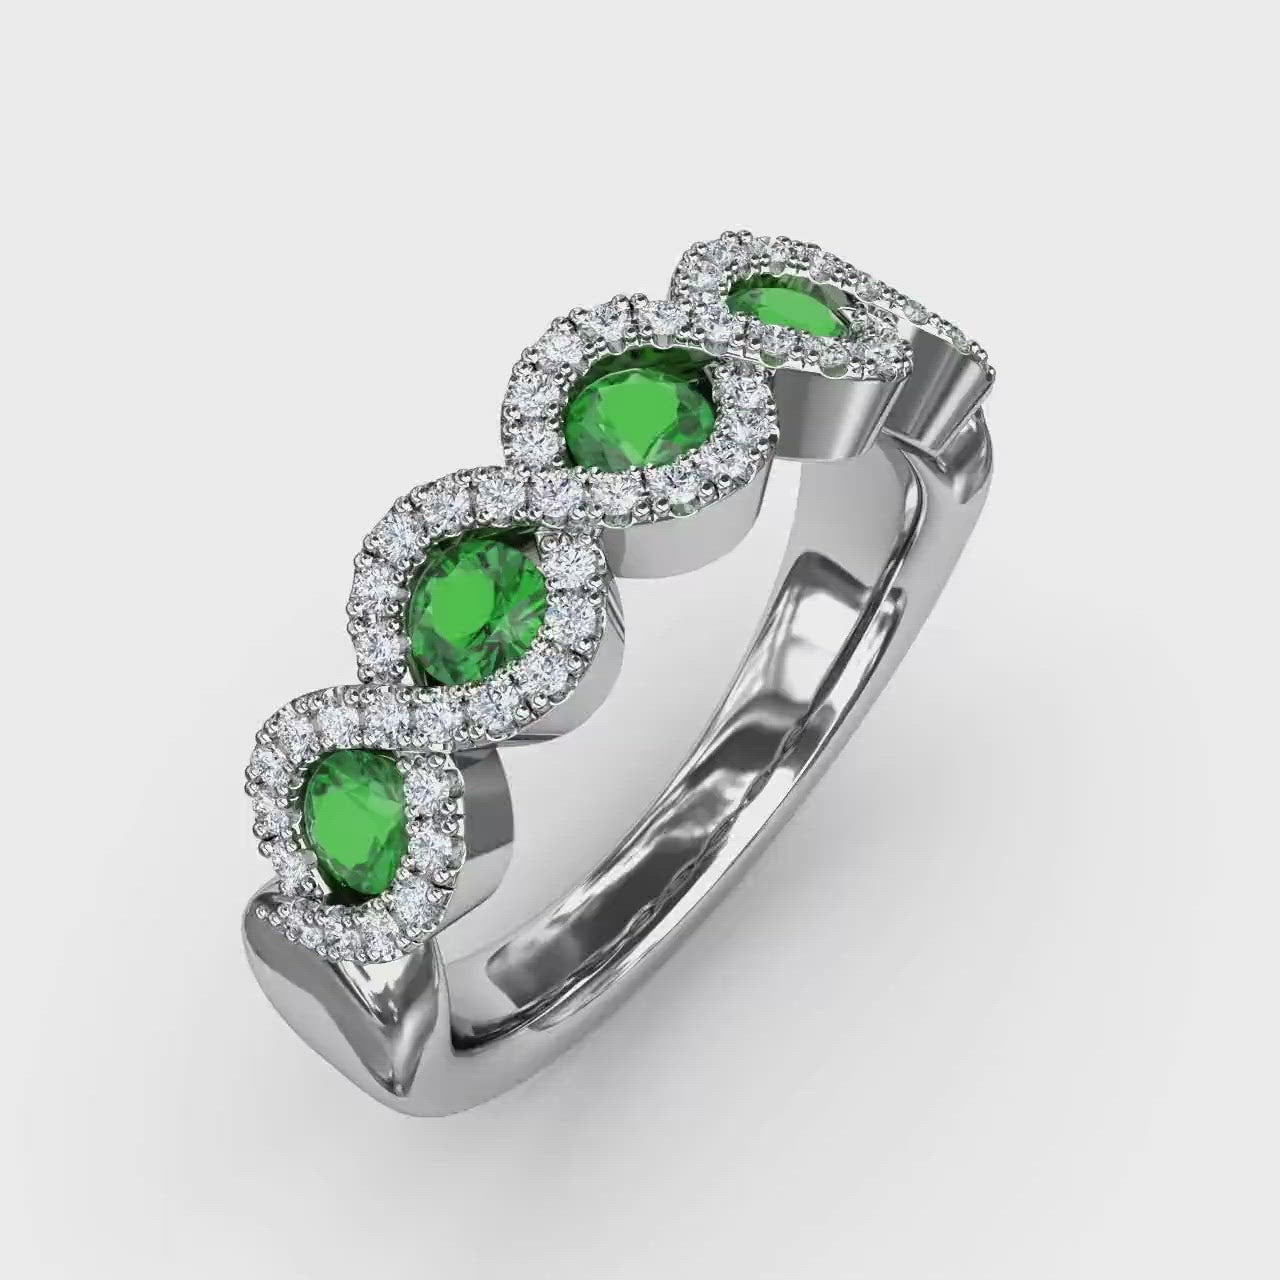 American Diamond Ring (जरकन अंगूठी) | Buy Zircon Ring, AD Ring